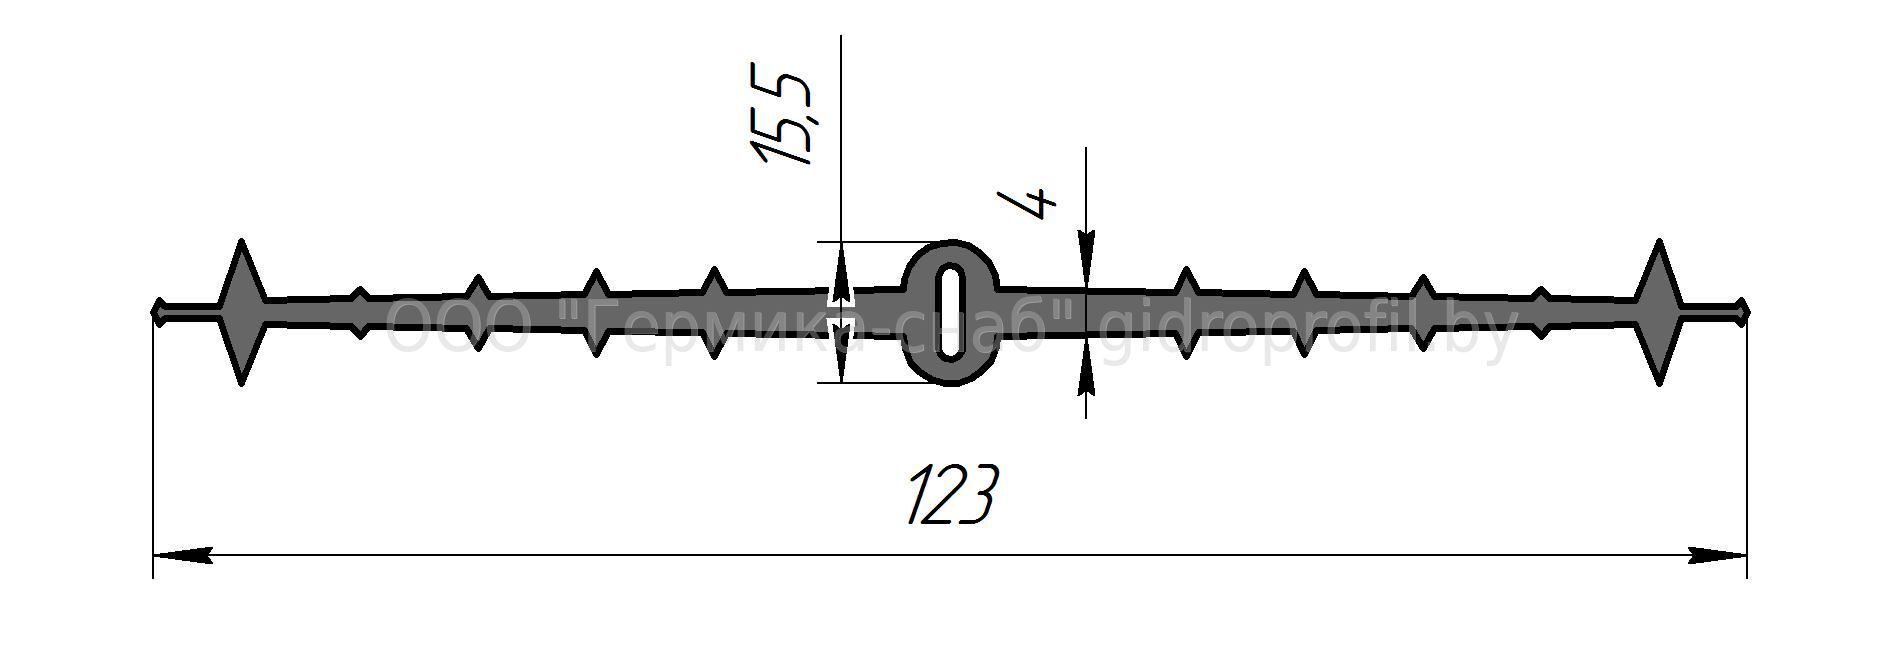 Гидрошпонка ЦД-123К10, ПВХ, ширина 123мм, шов 15-20мм